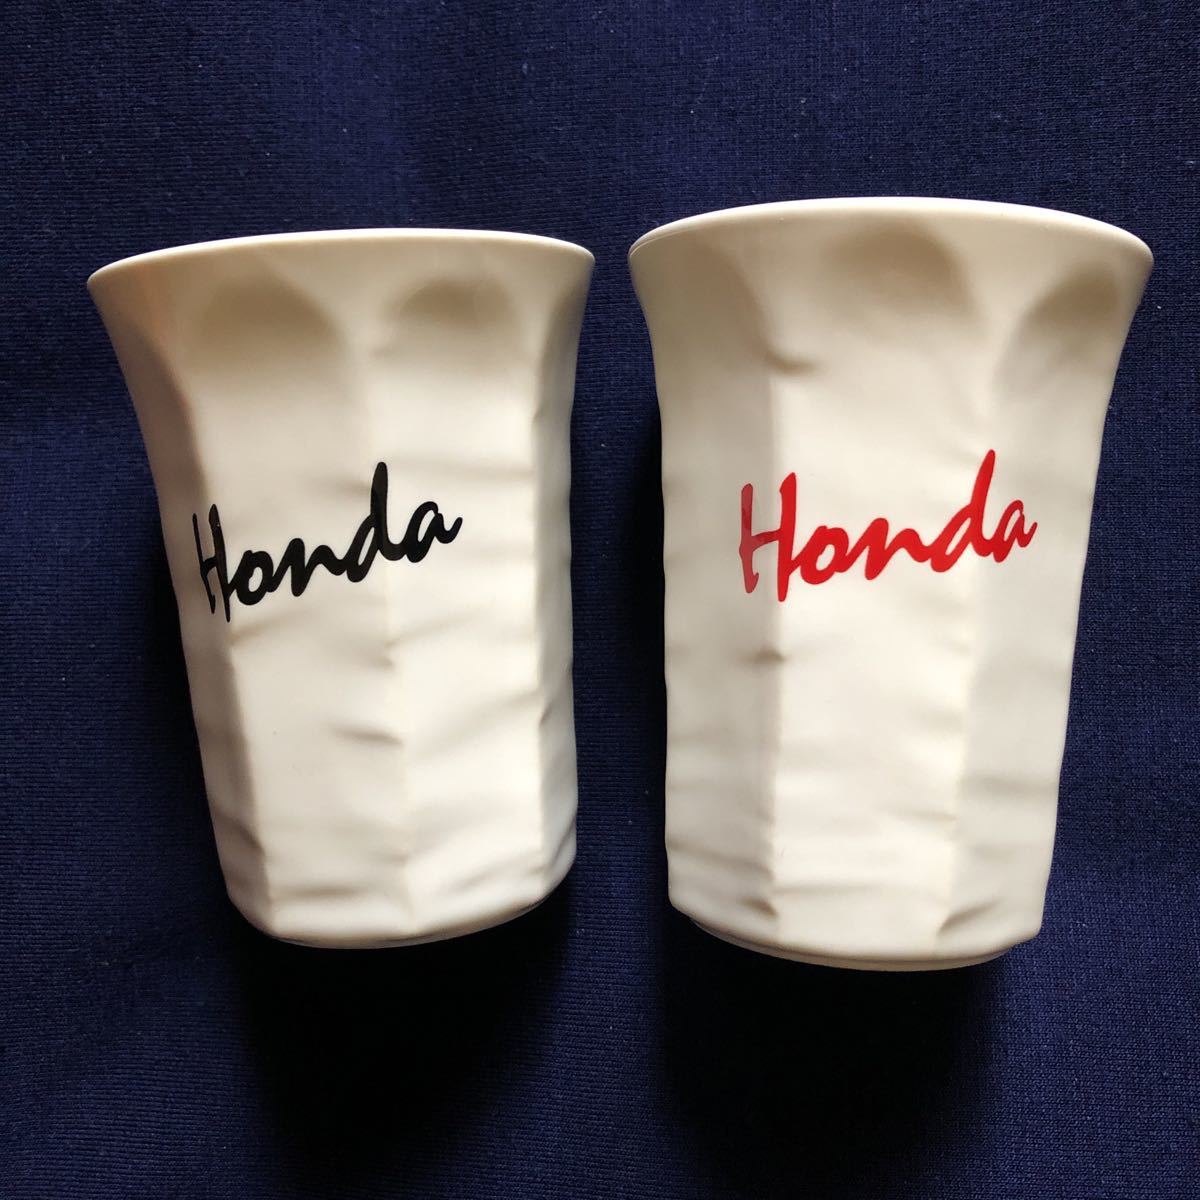  ultra rare not for sale HONDA Honda ceramics made teacup tumbler 2 piece set Novelty 